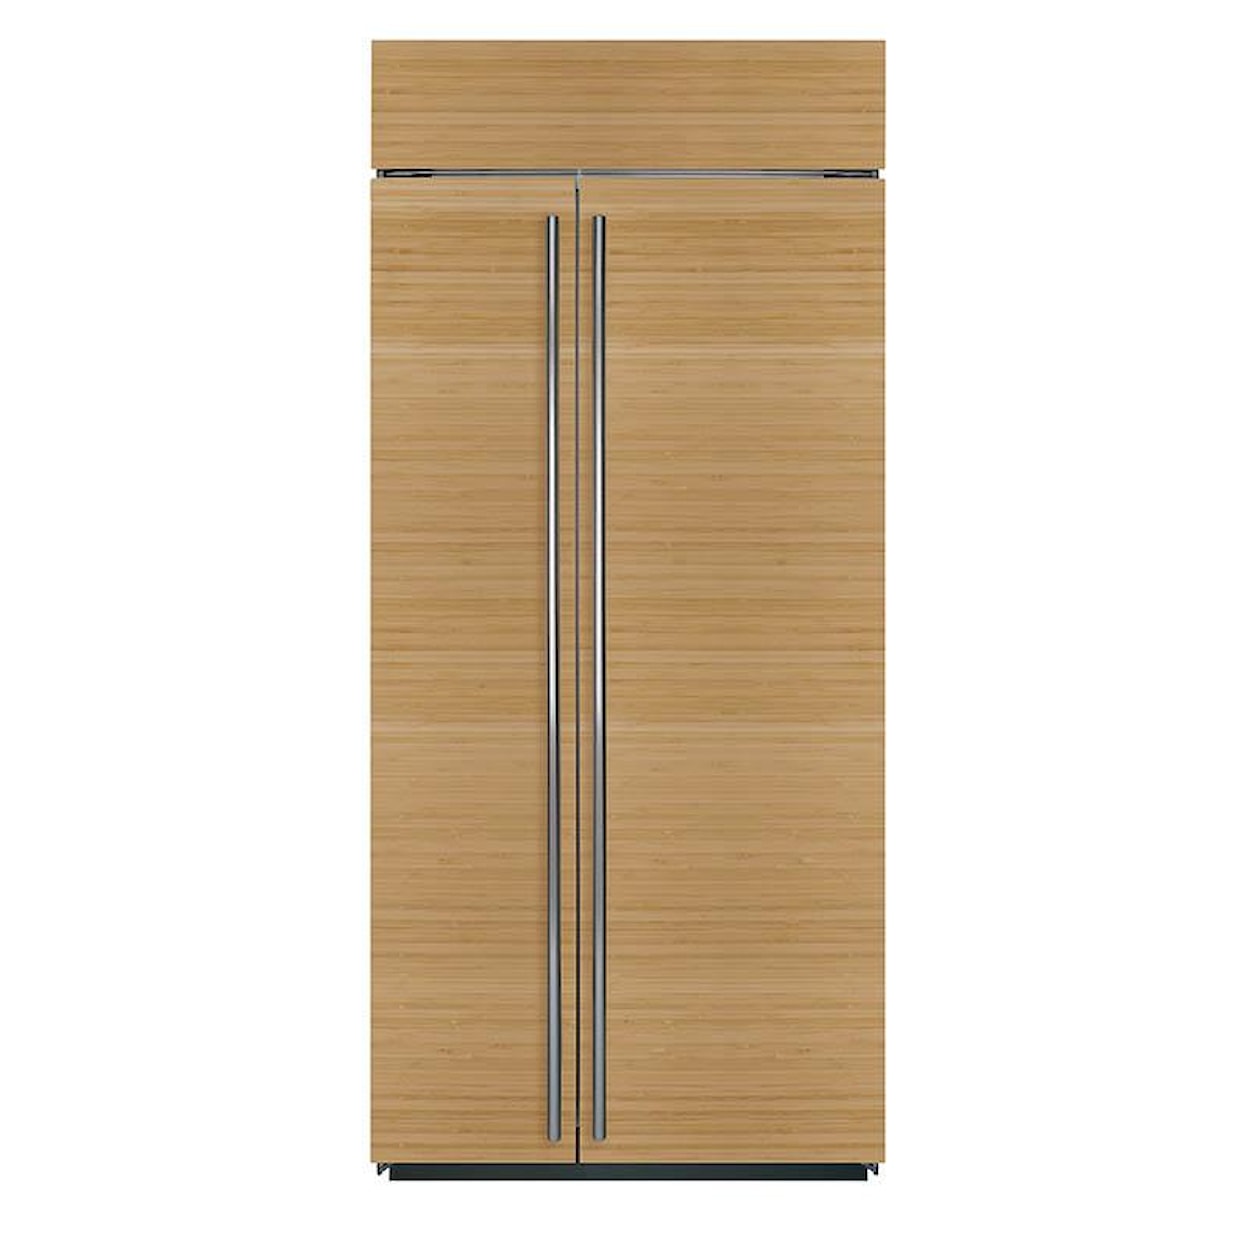 Sub-Zero Built-In Refrigerators 20.2 Cu. Ft. Side-by-Side Refrigerator